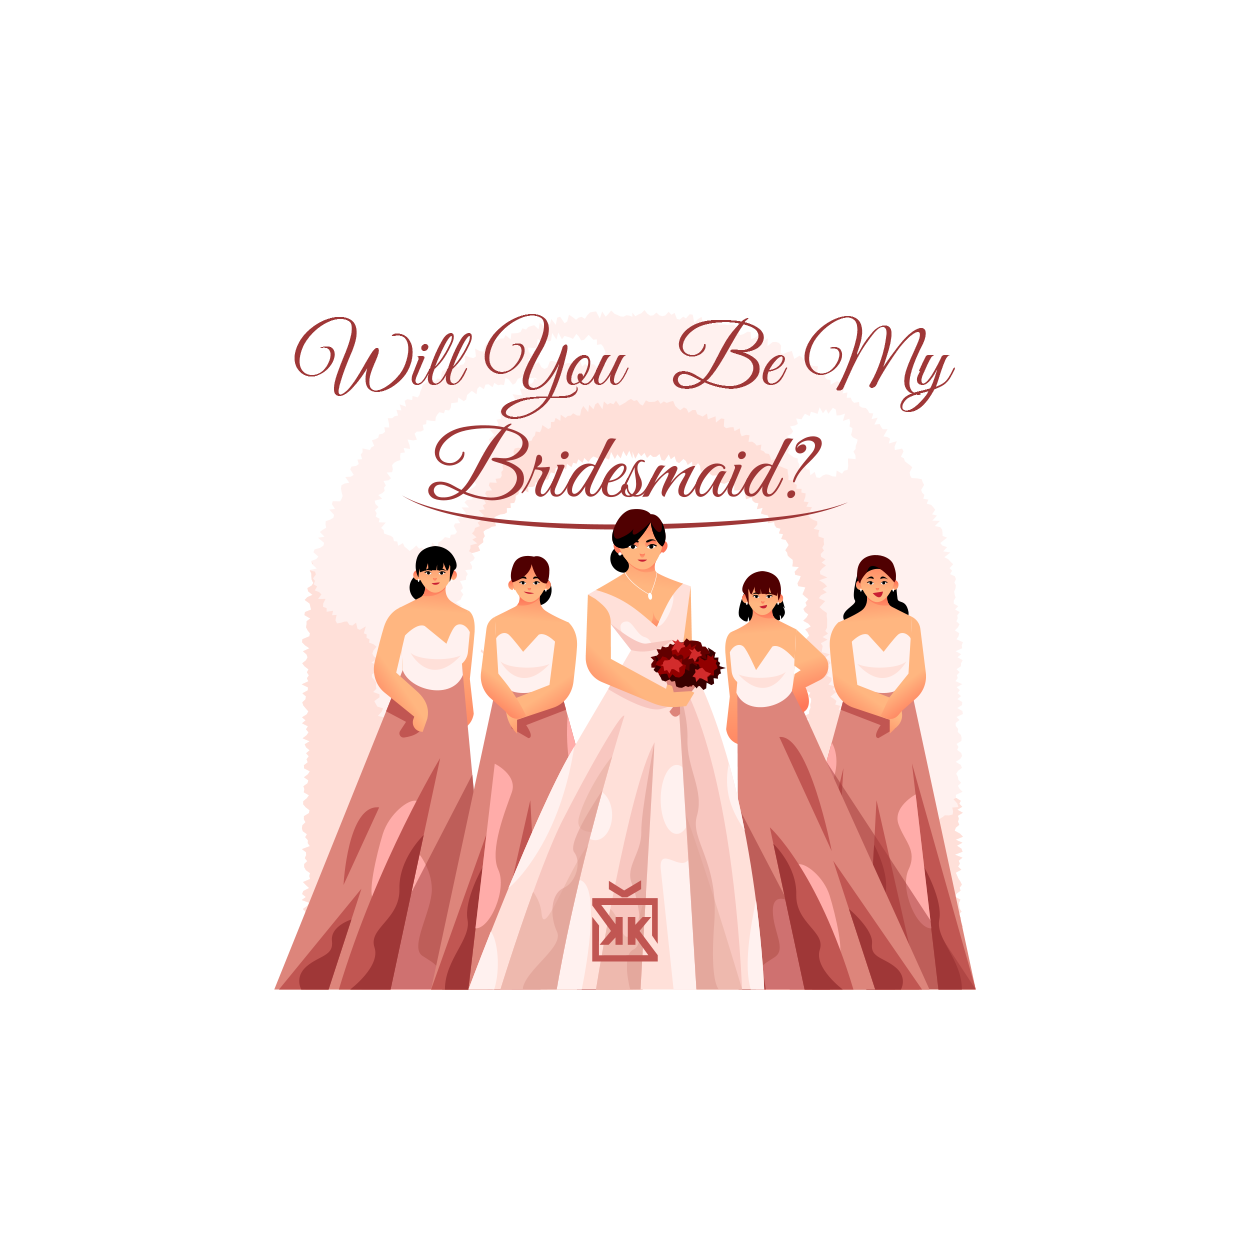 241915-will-you-be-my-bridesmaid-2-motto-karti